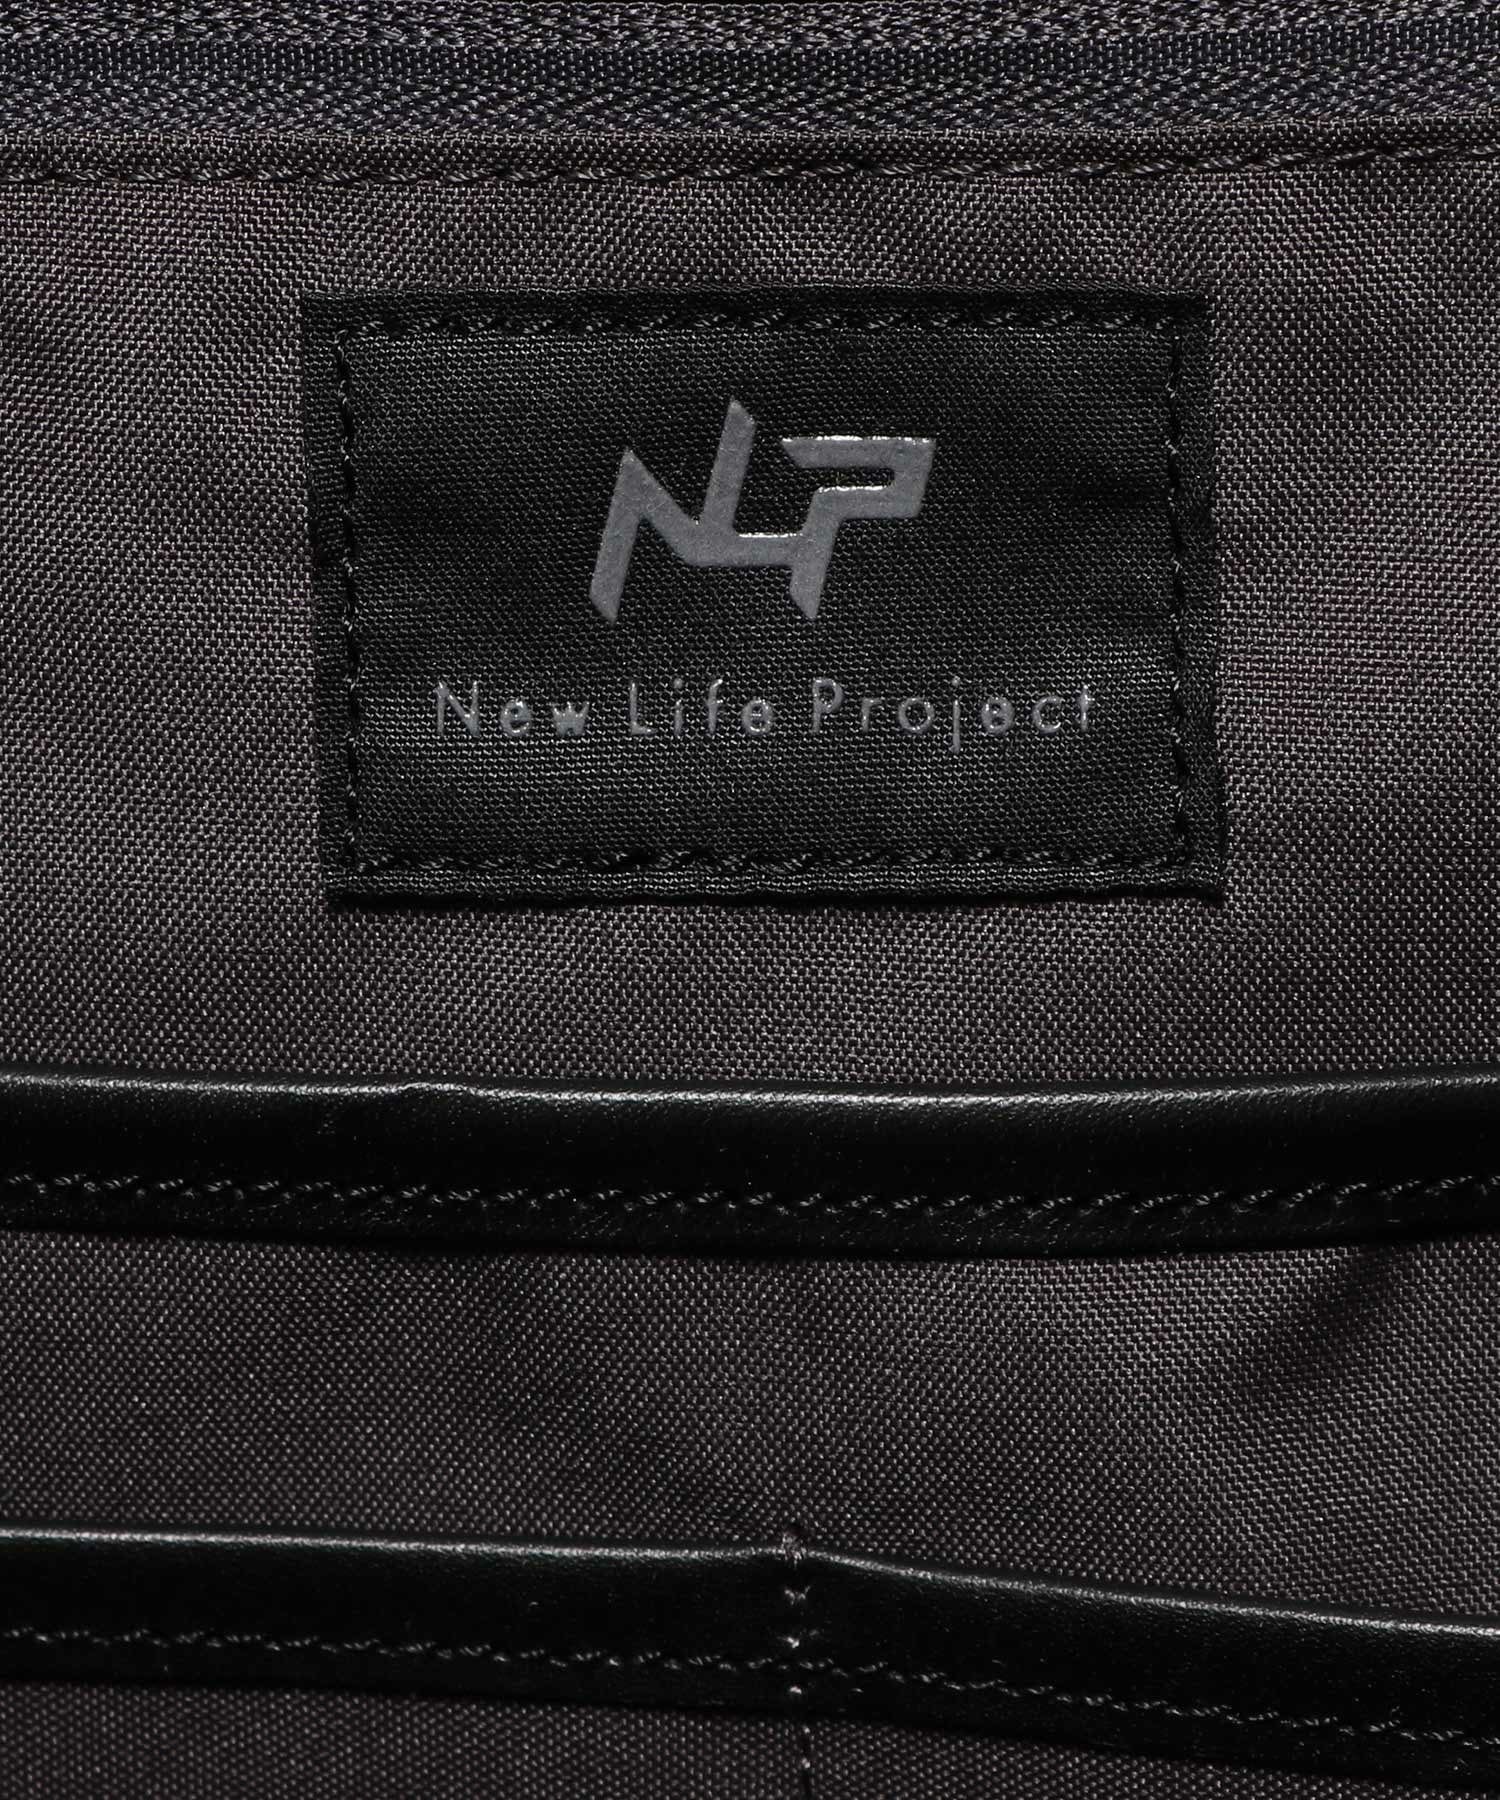 New Life Project / ワイドキャンバストートバッグ《ESTNATION 